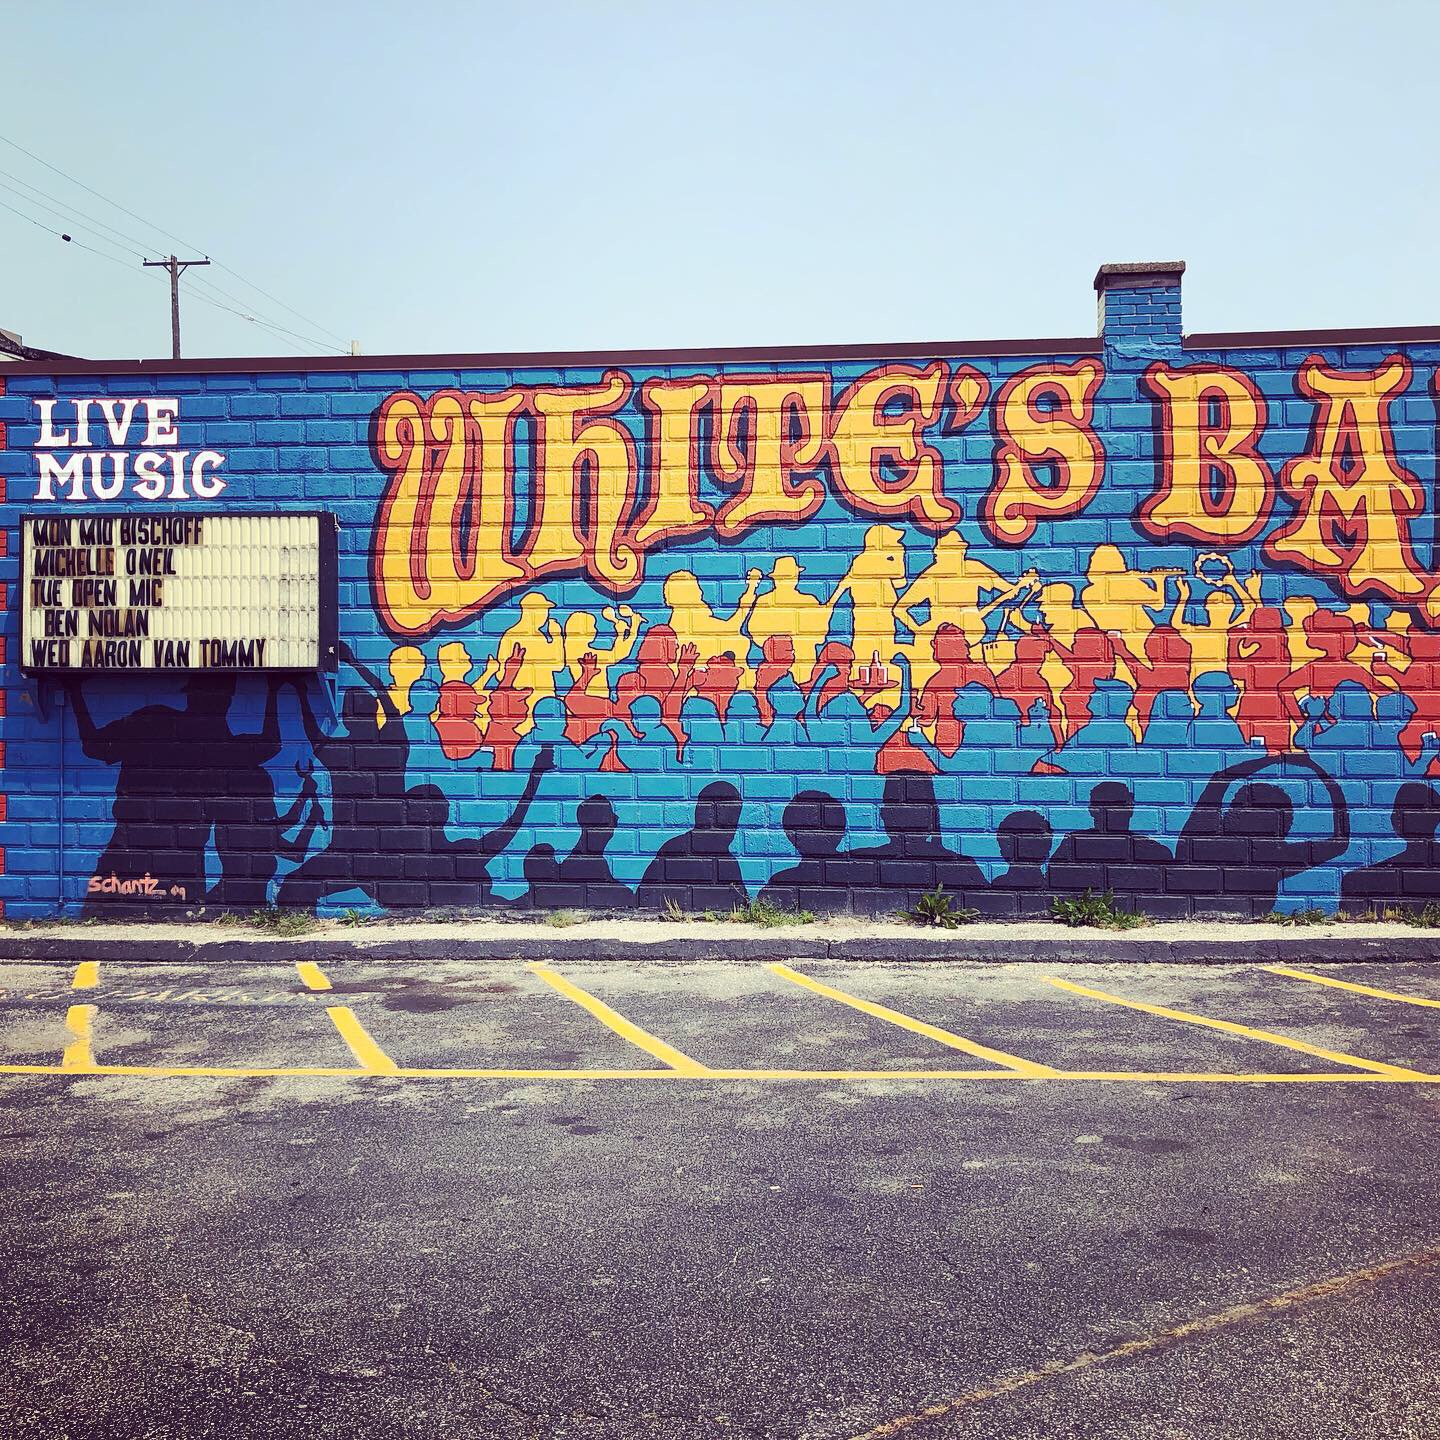 White’s Bar in Saginaw, Michigan